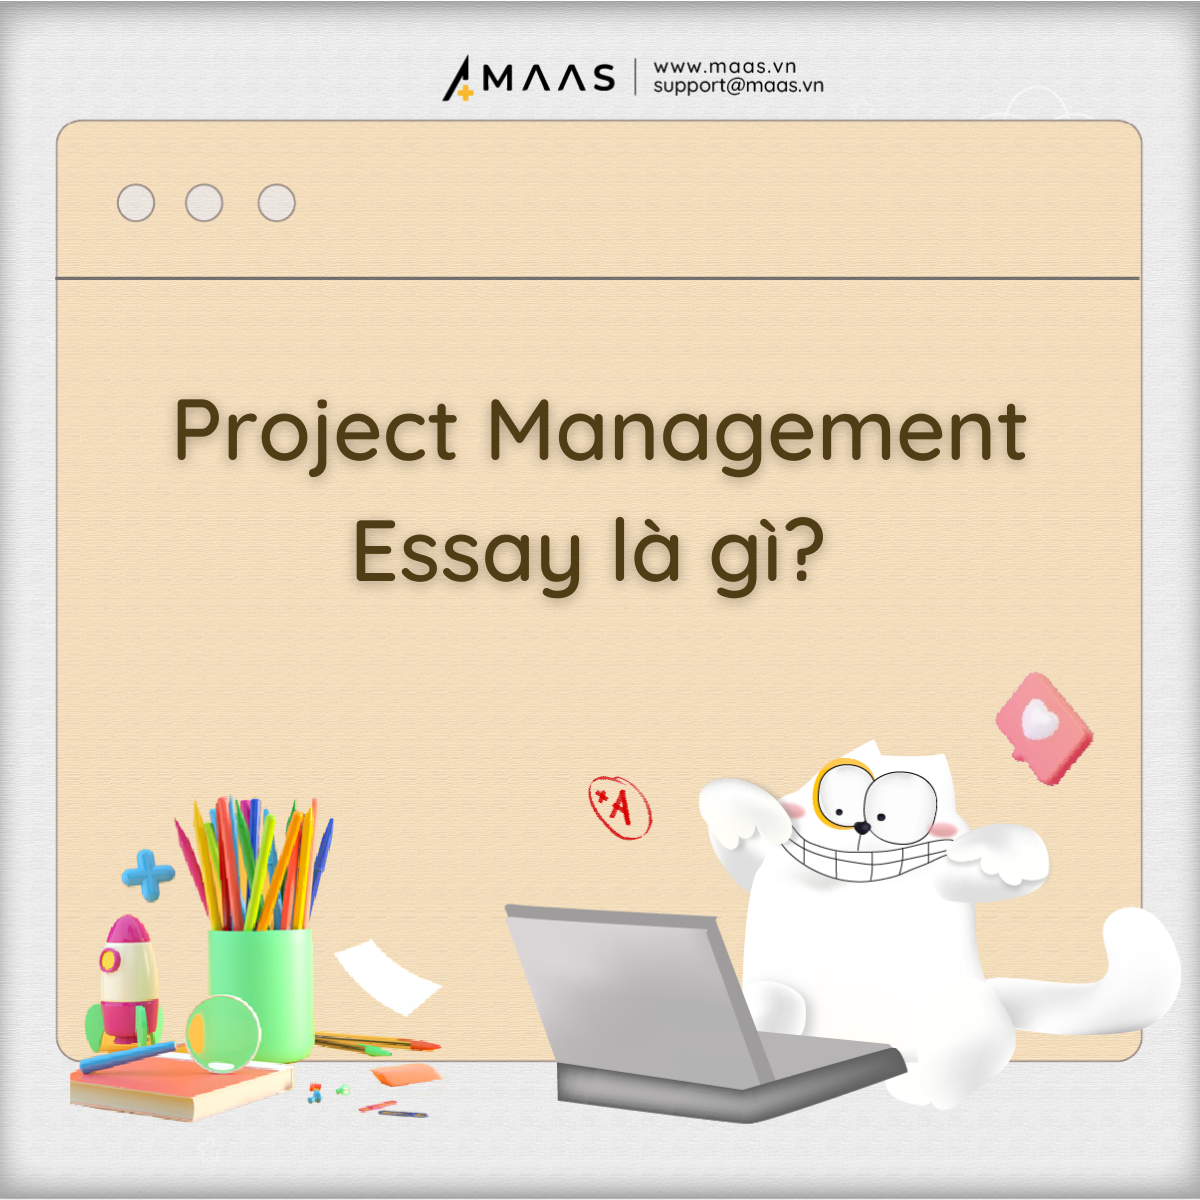 Project Management Essay